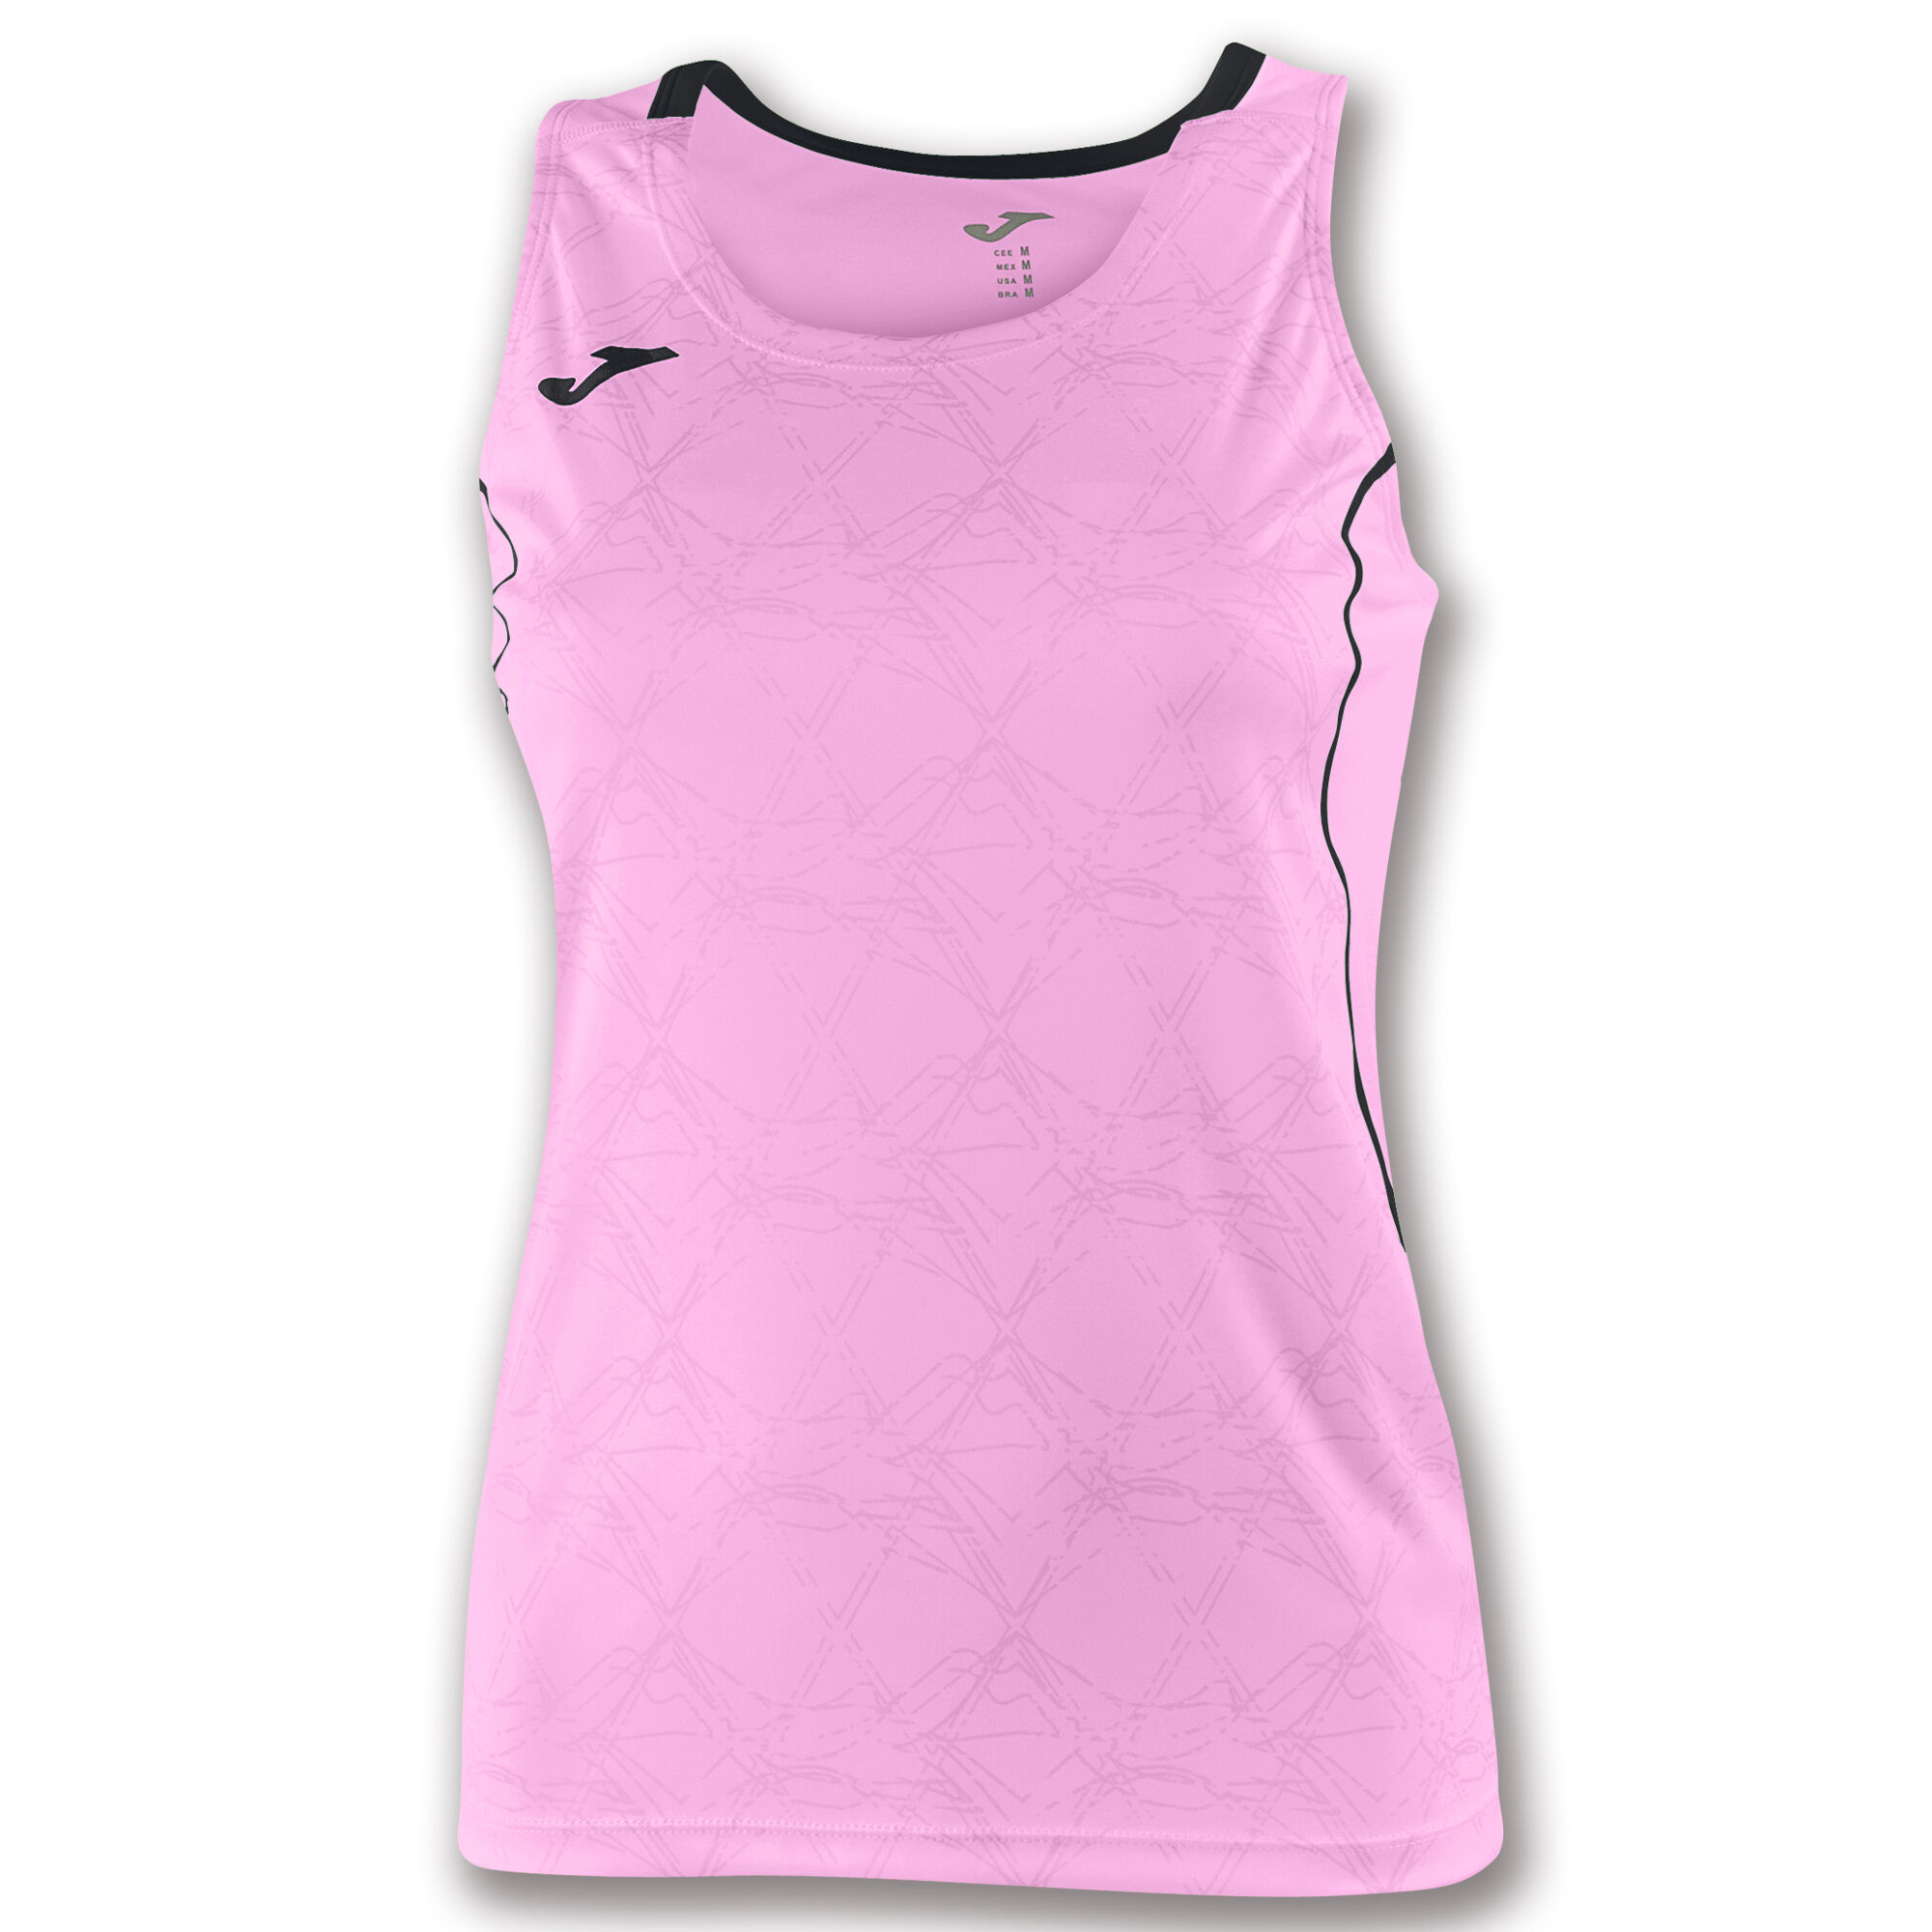 Camiseta sin mangas mujer Olimpia rosa flúor